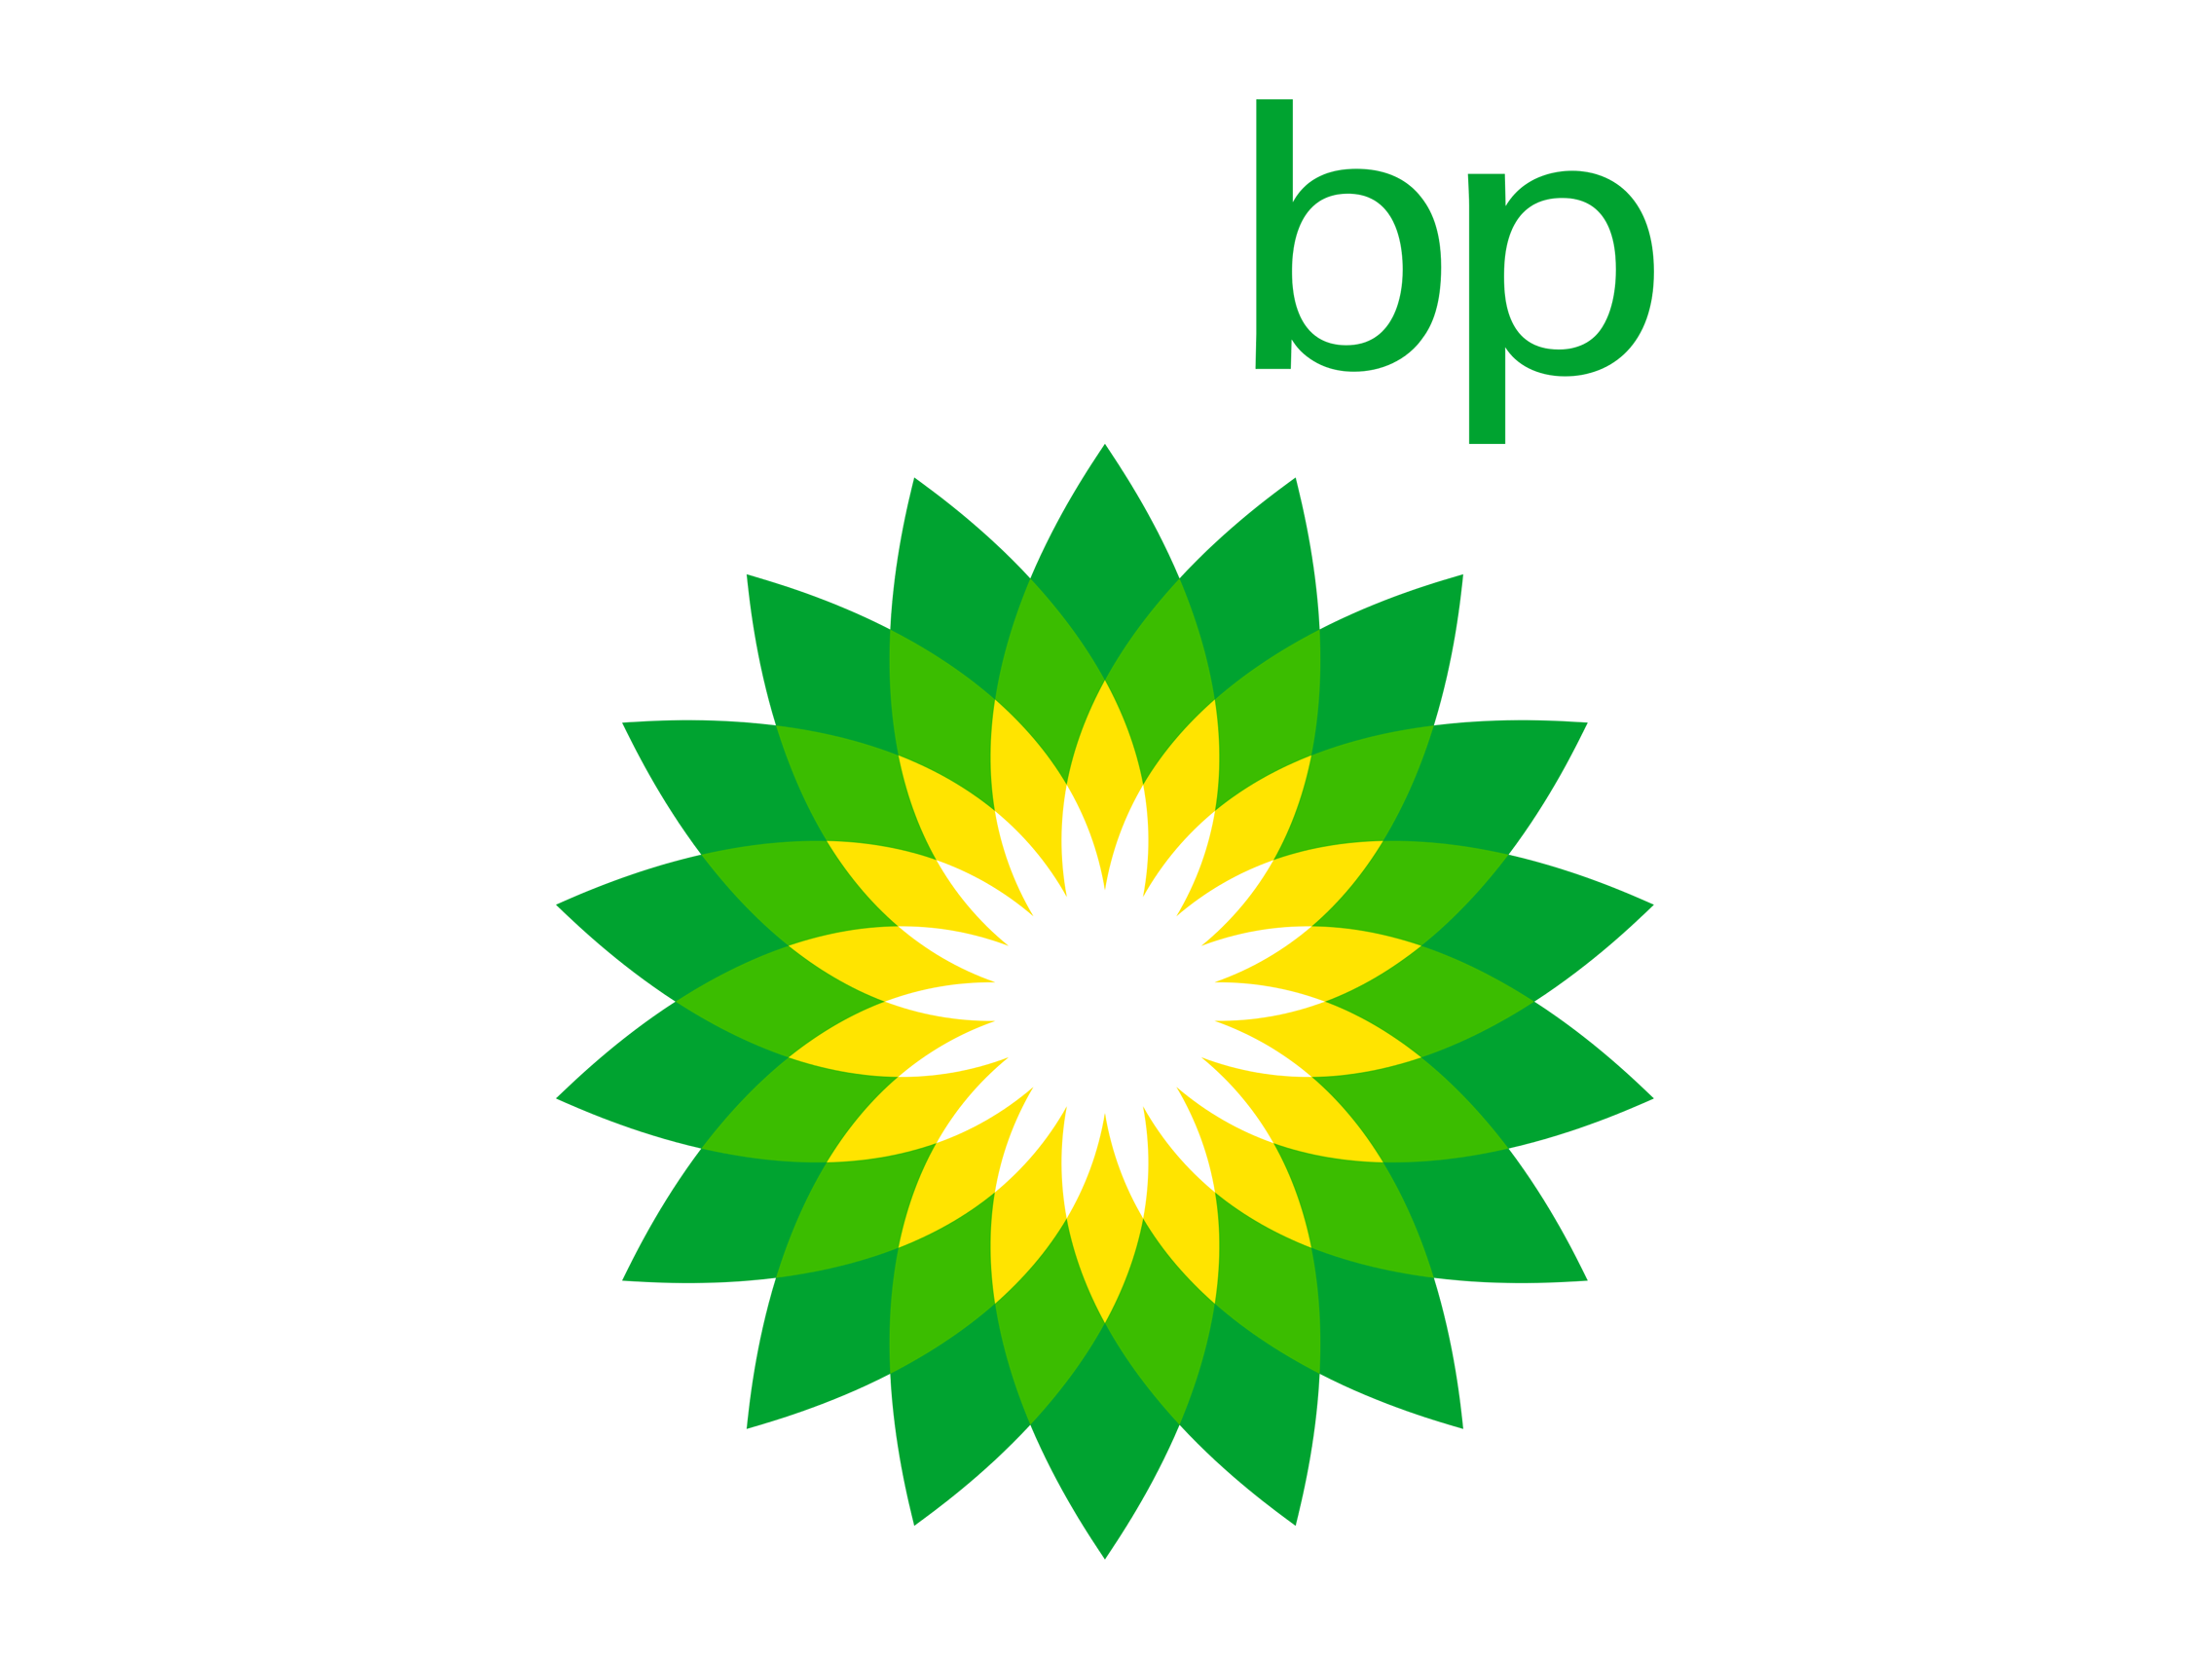 Tony Hayward Out As Public Face Of BP